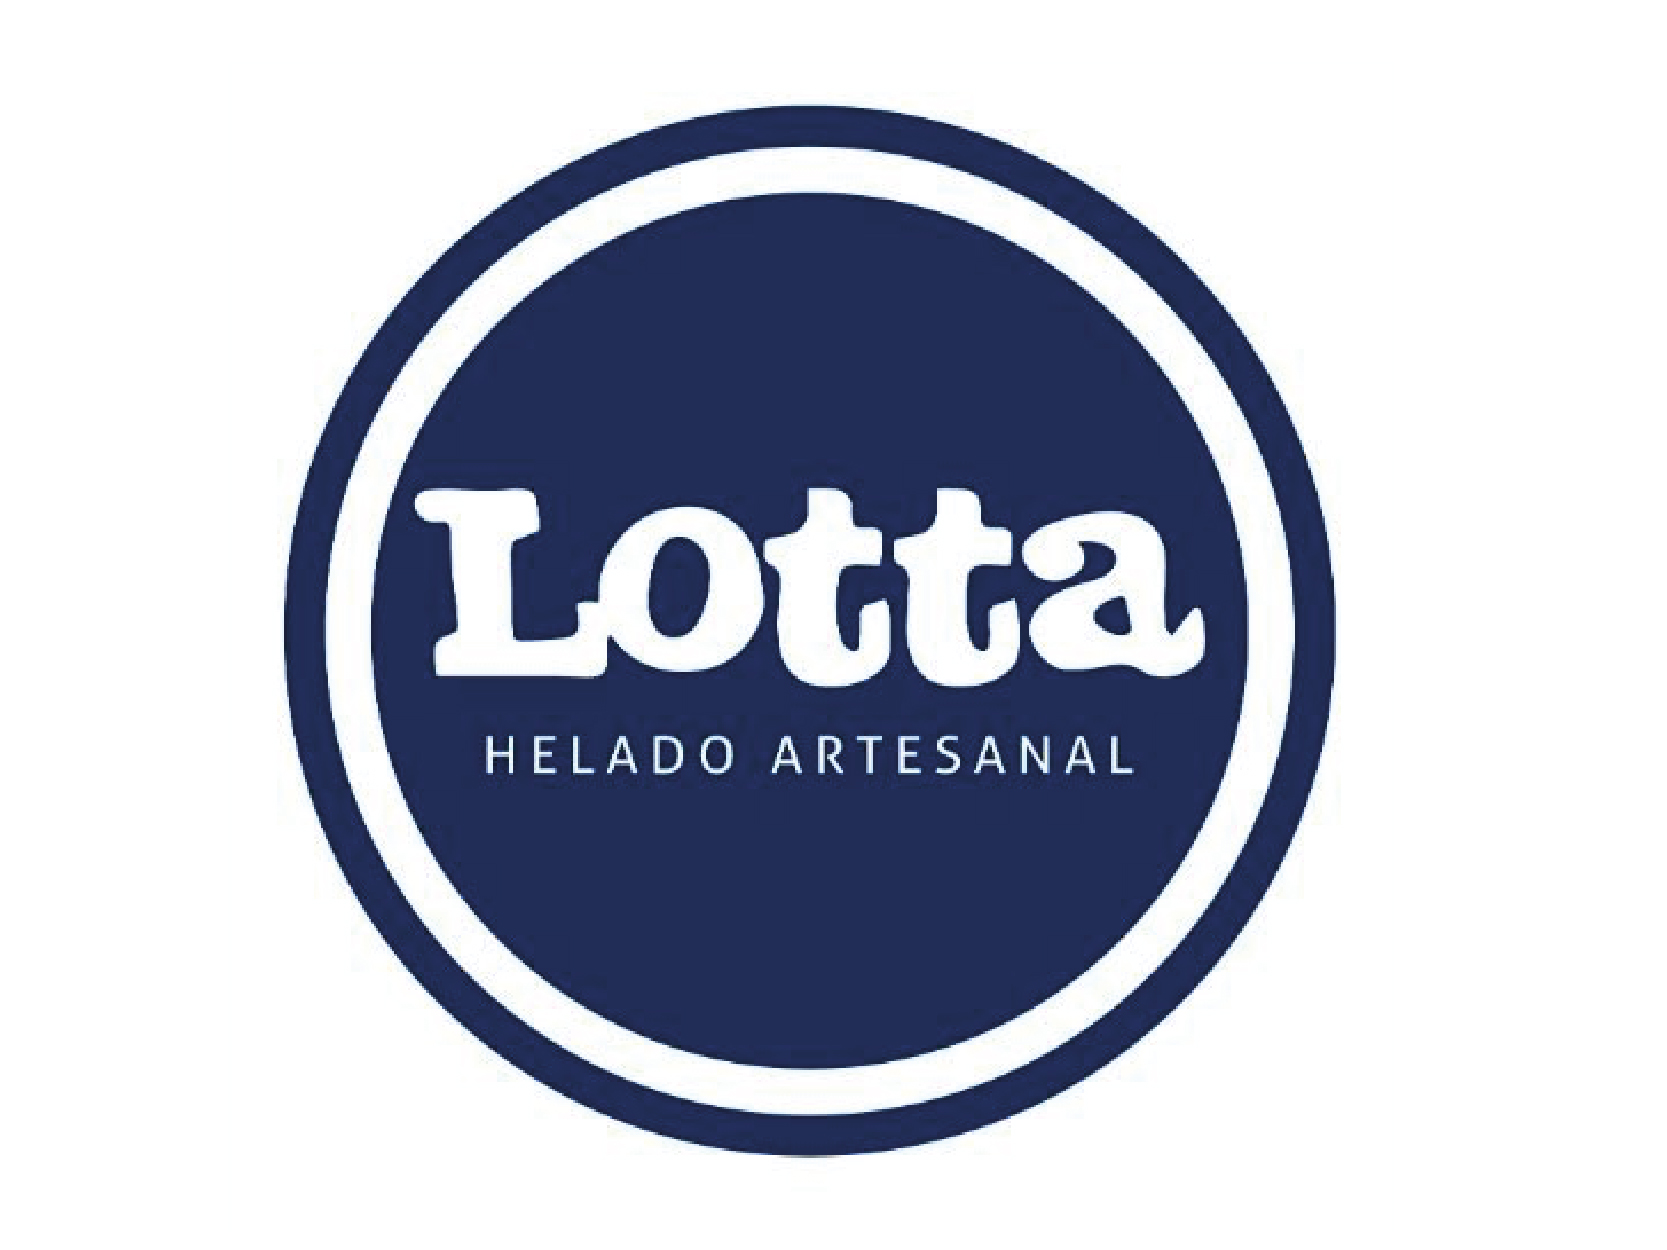 LOTTA HELADOS ARTESANAL